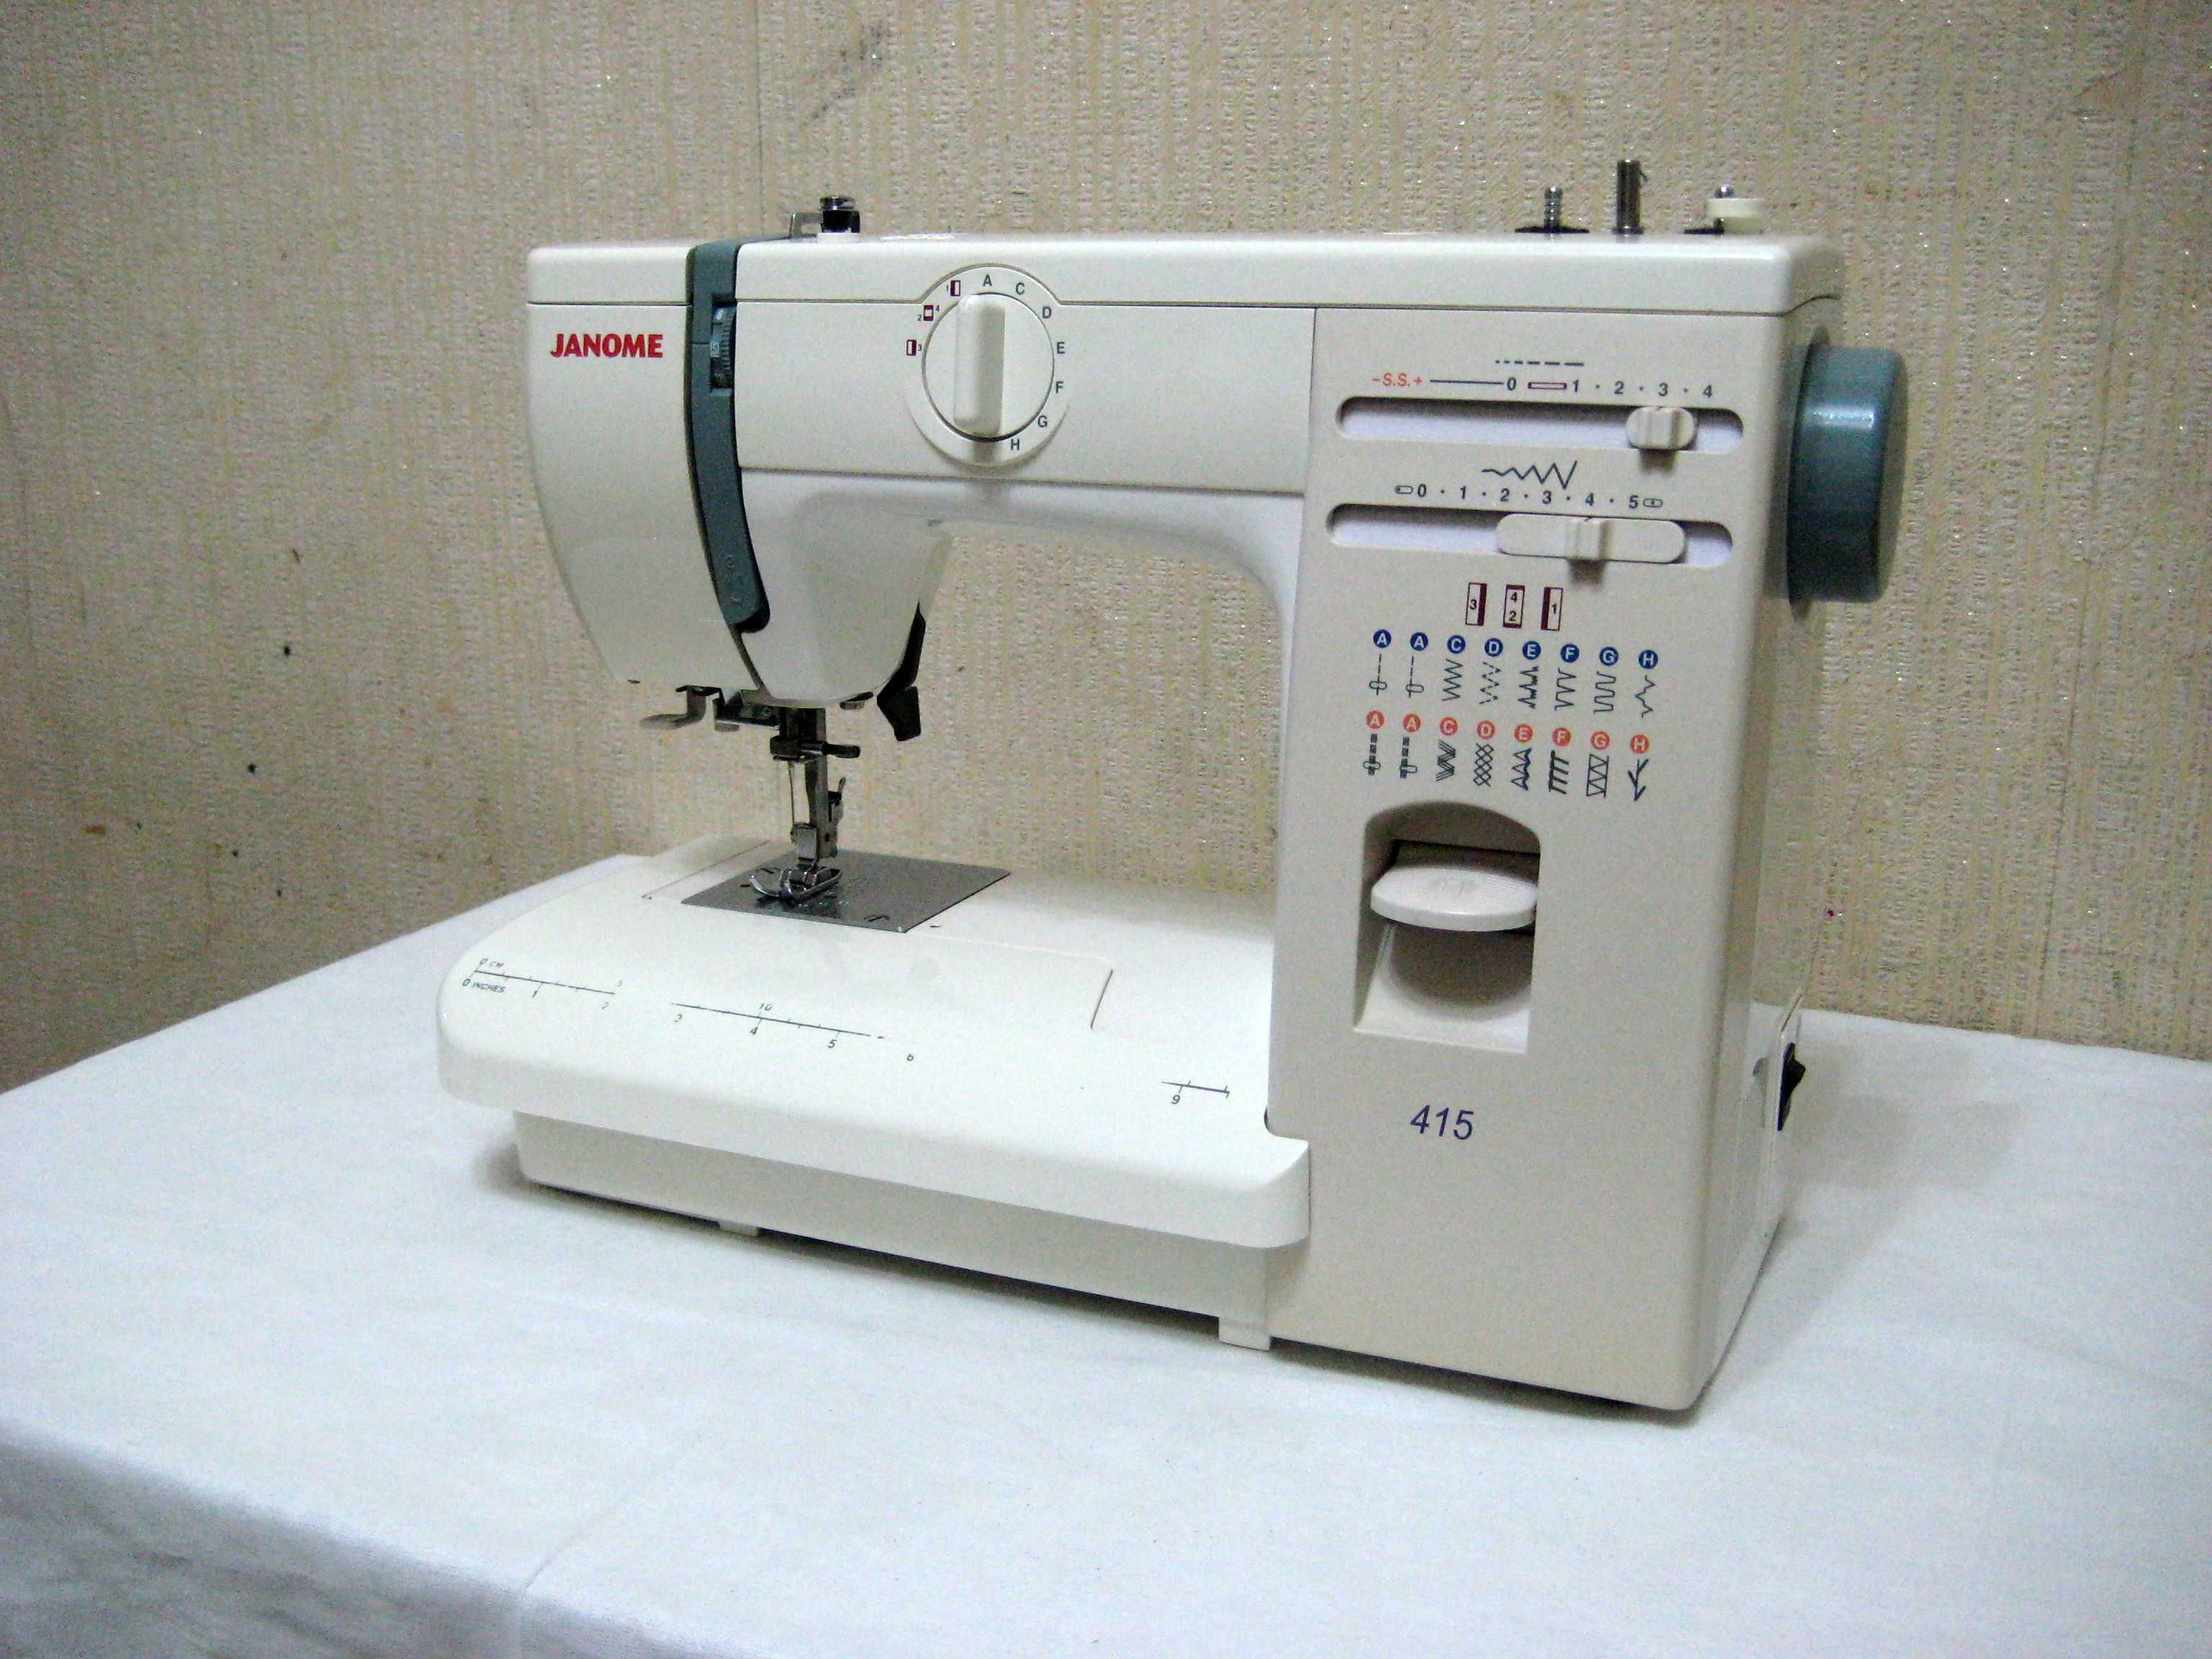 Janome415 швейный машинка оригинал Japan(made in Thailand)почти новая!